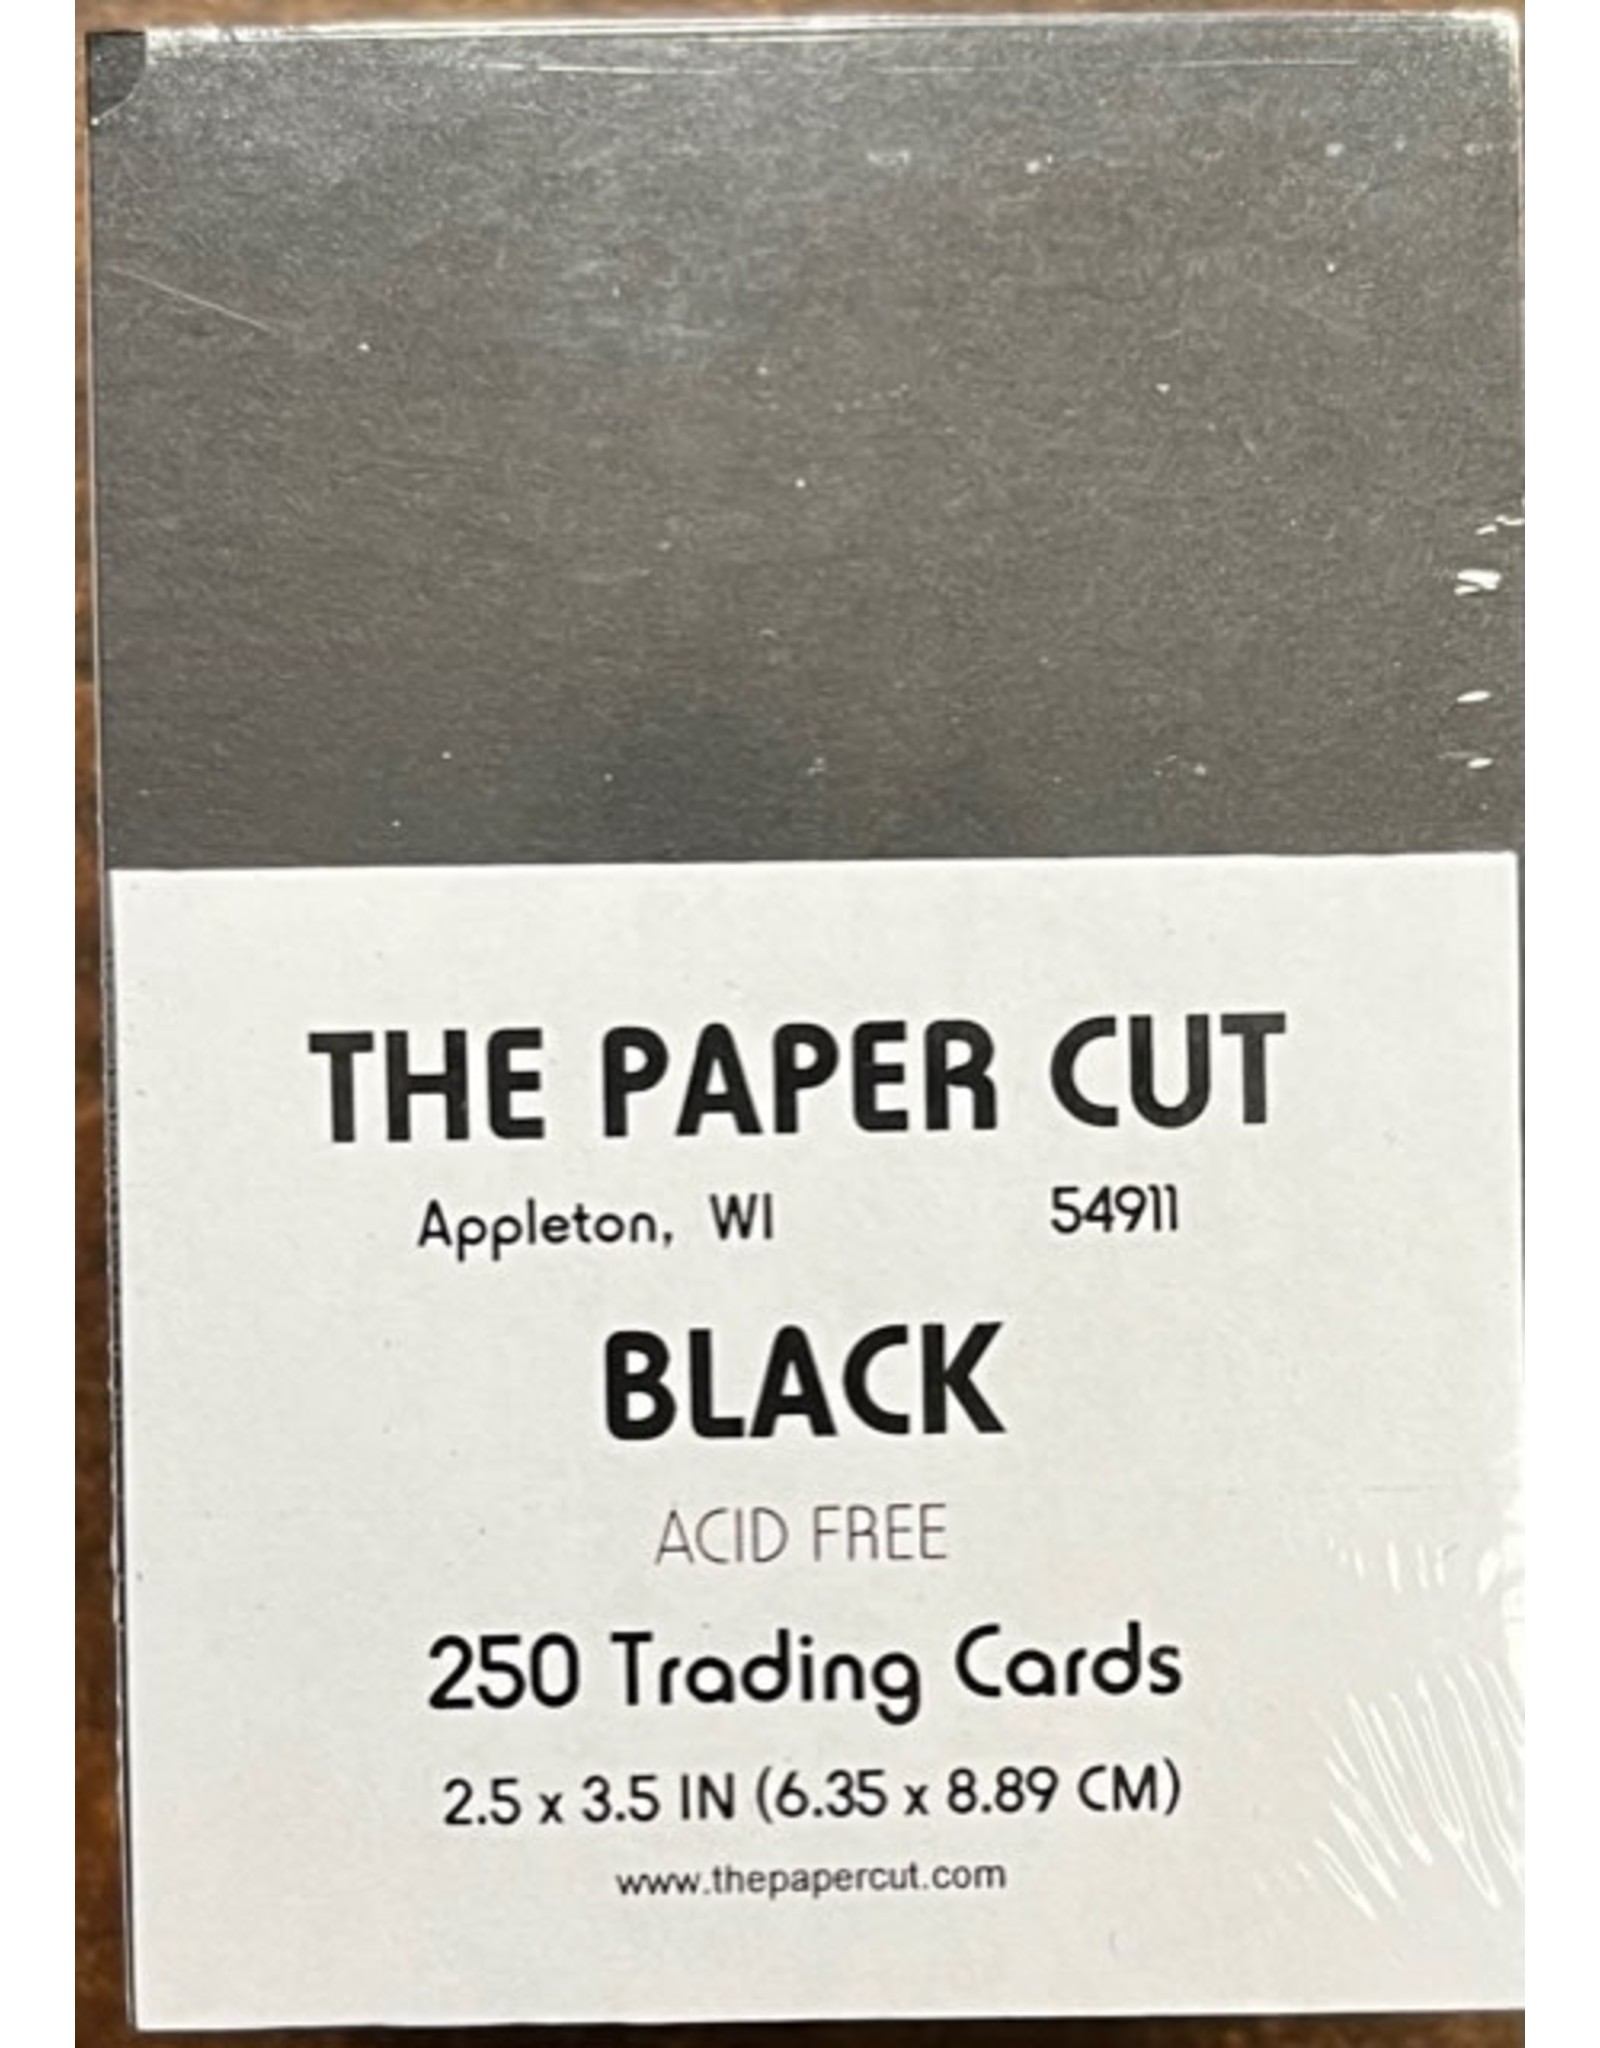 PAPER CUT THE PAPER CUT BLACK TRADING CARDS 2.5x3.5 250/PK